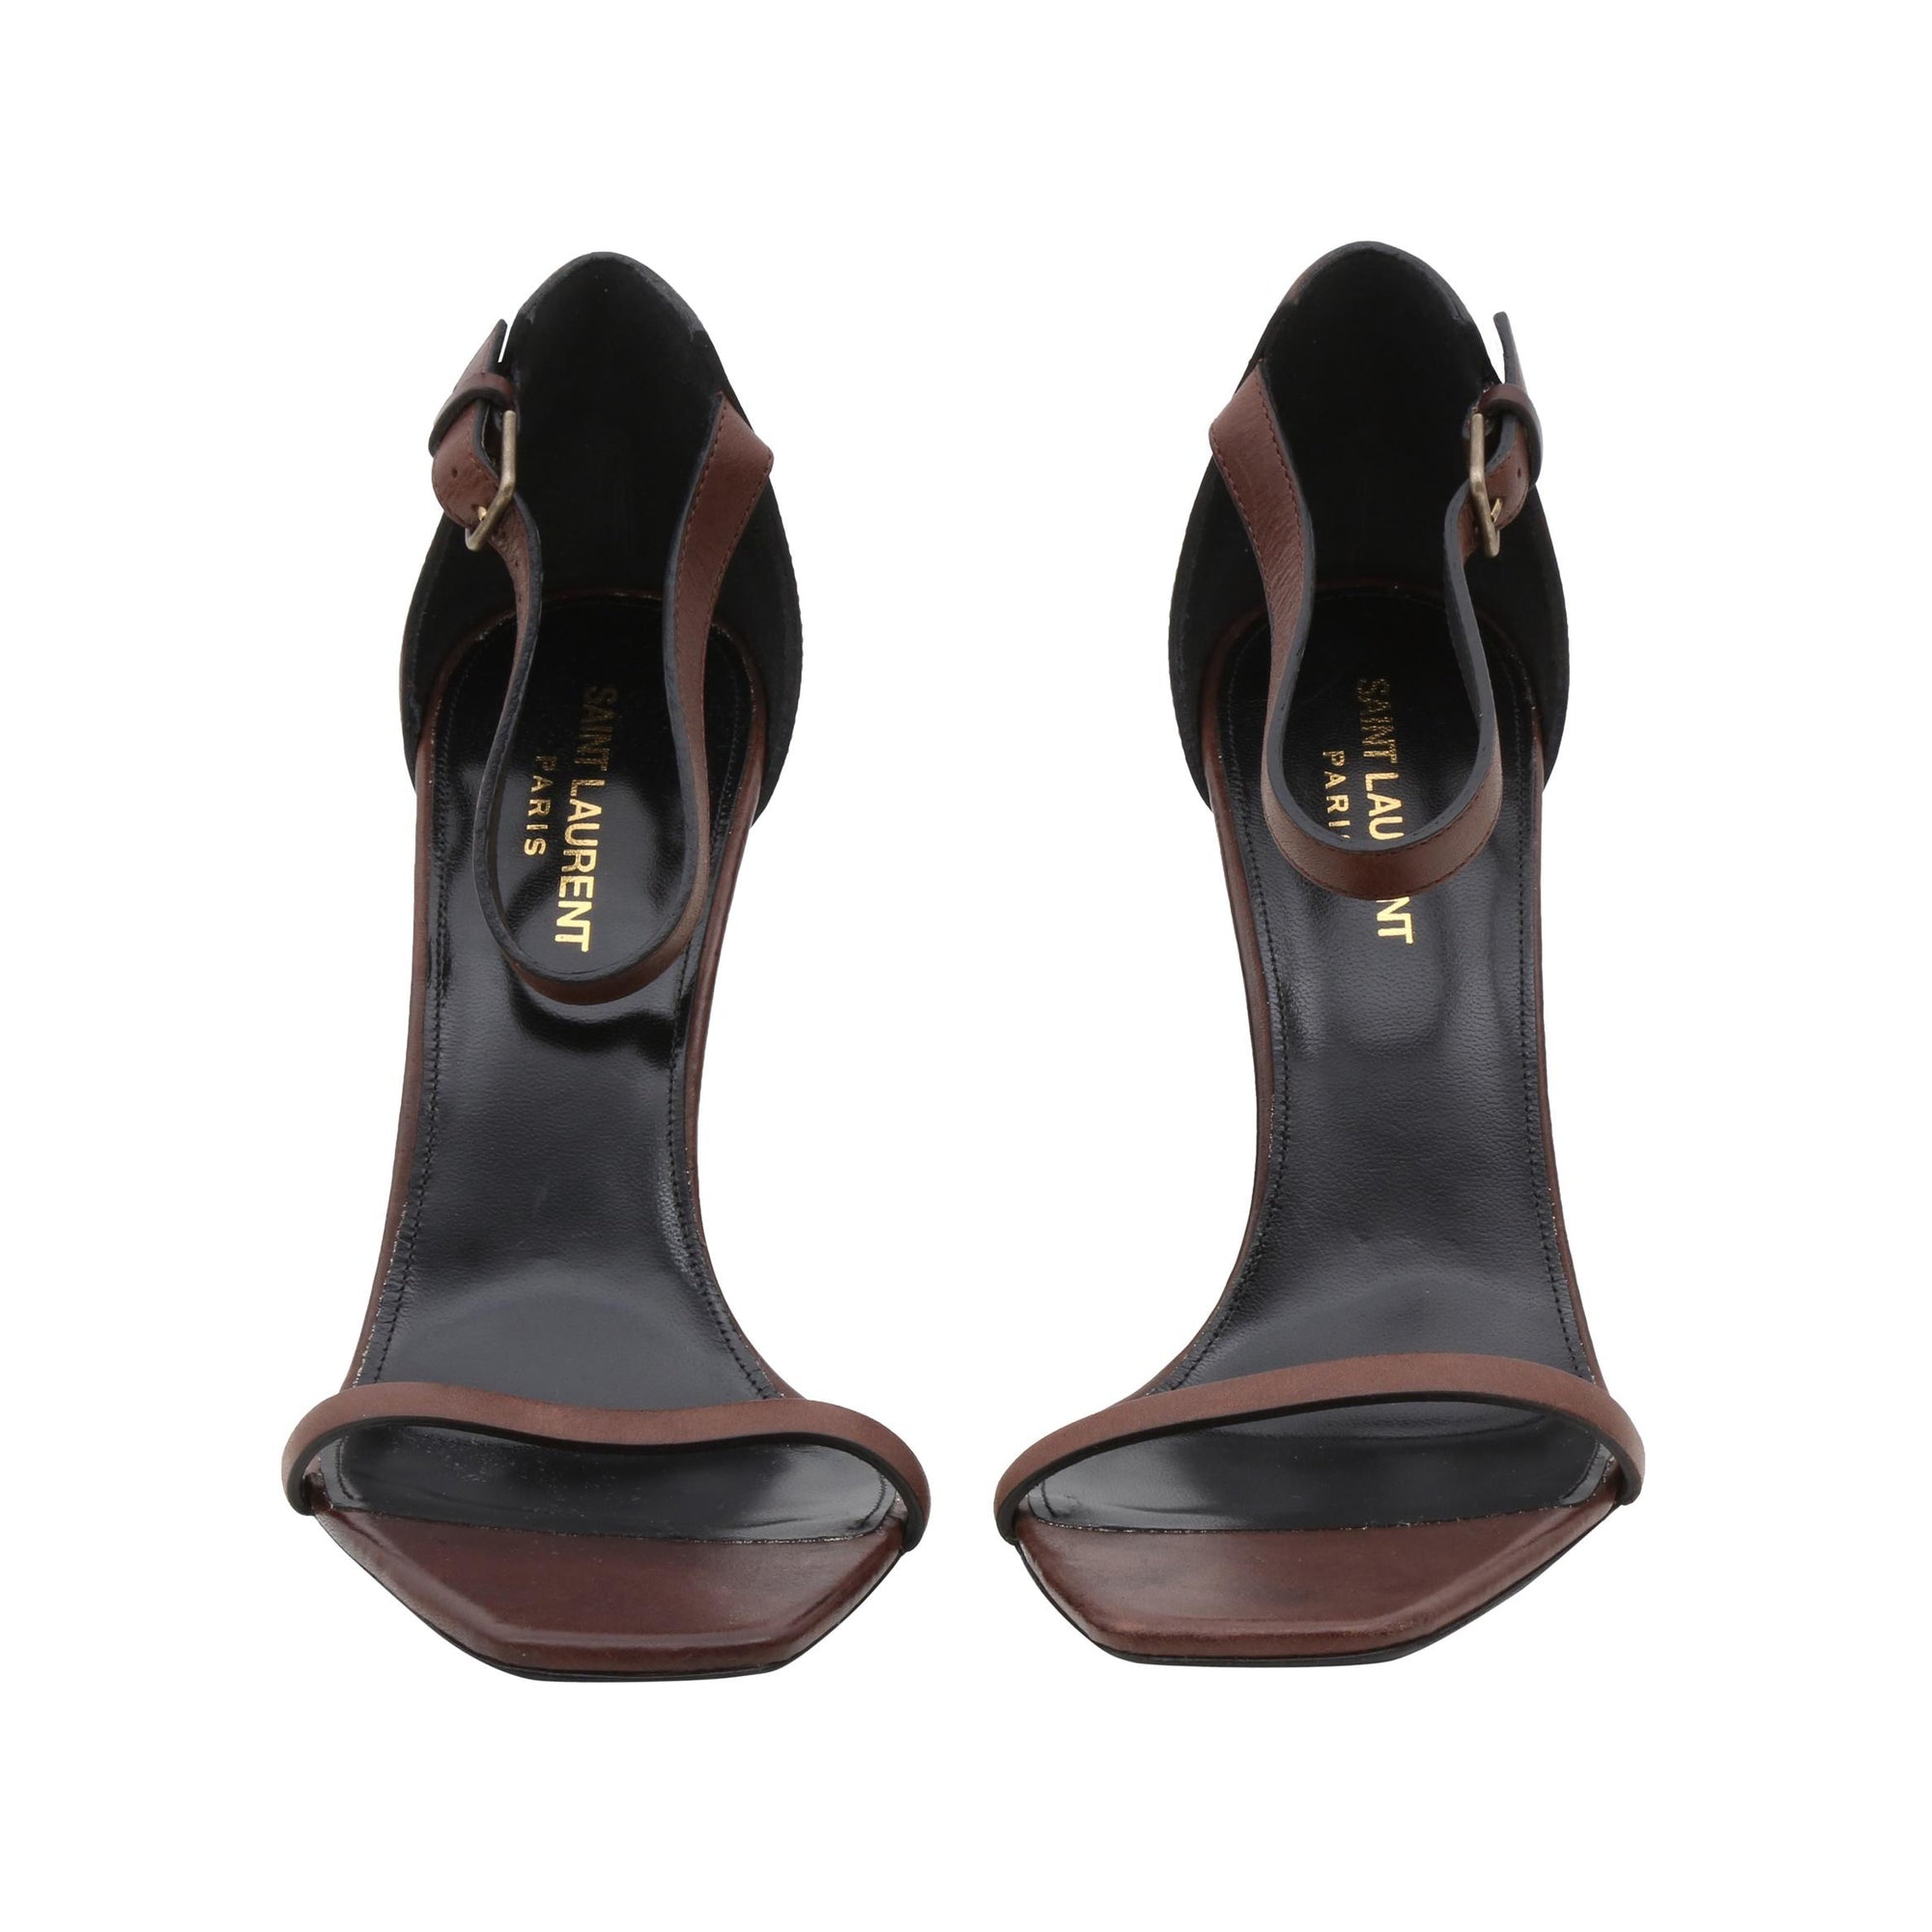 Opyum leather heels Saint Laurent Black size 39 EU in Leather